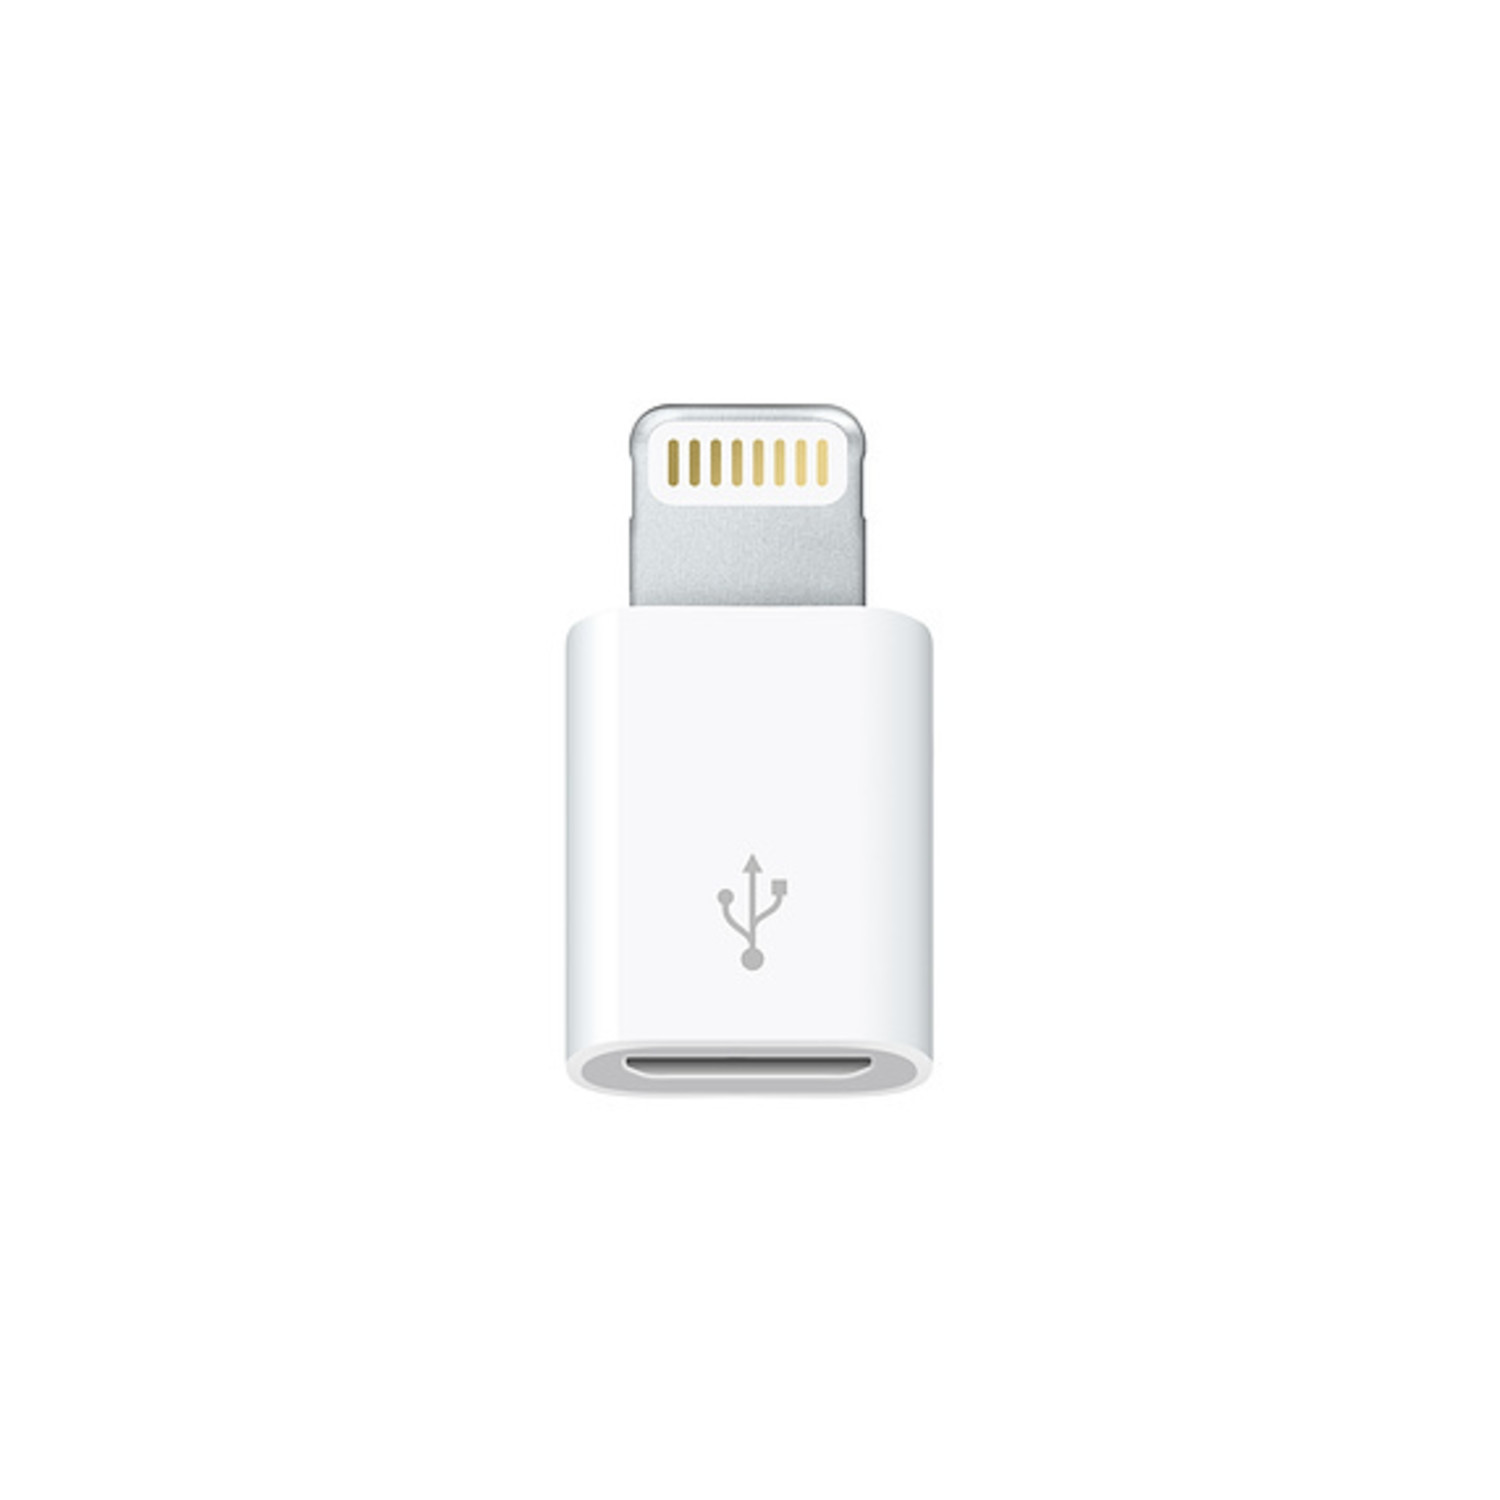 Lightning to Micro USB Adapter - kite+key, Rutgers Tech Store